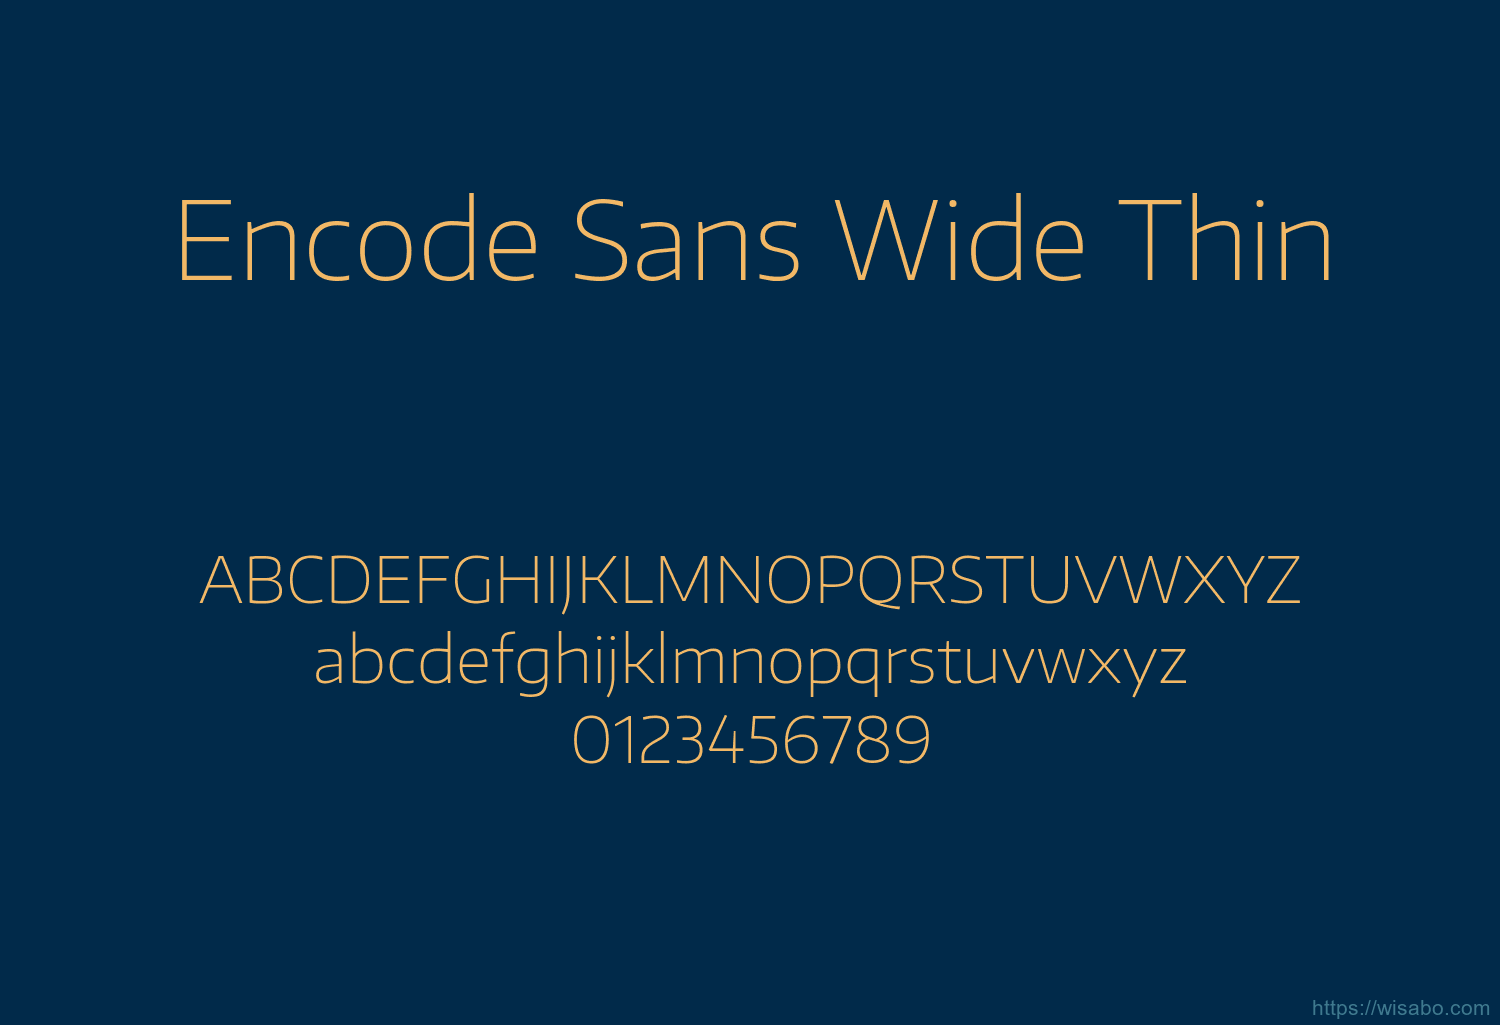 Encode Sans Wide Thin